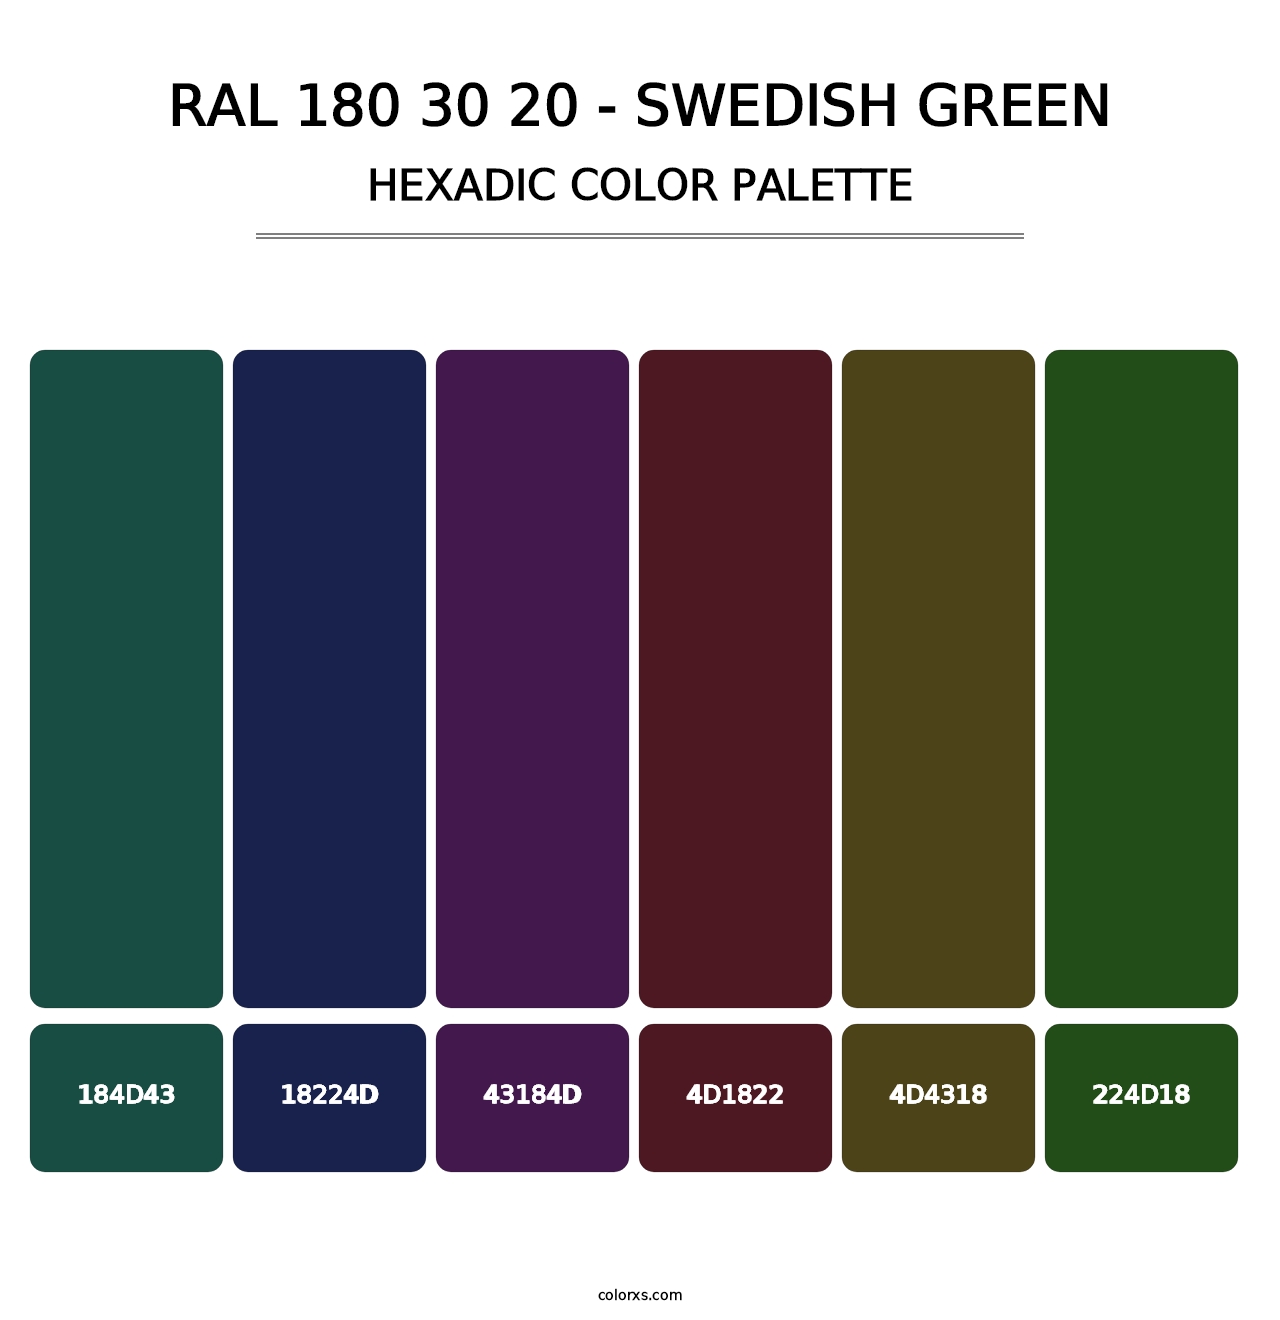 RAL 180 30 20 - Swedish Green - Hexadic Color Palette